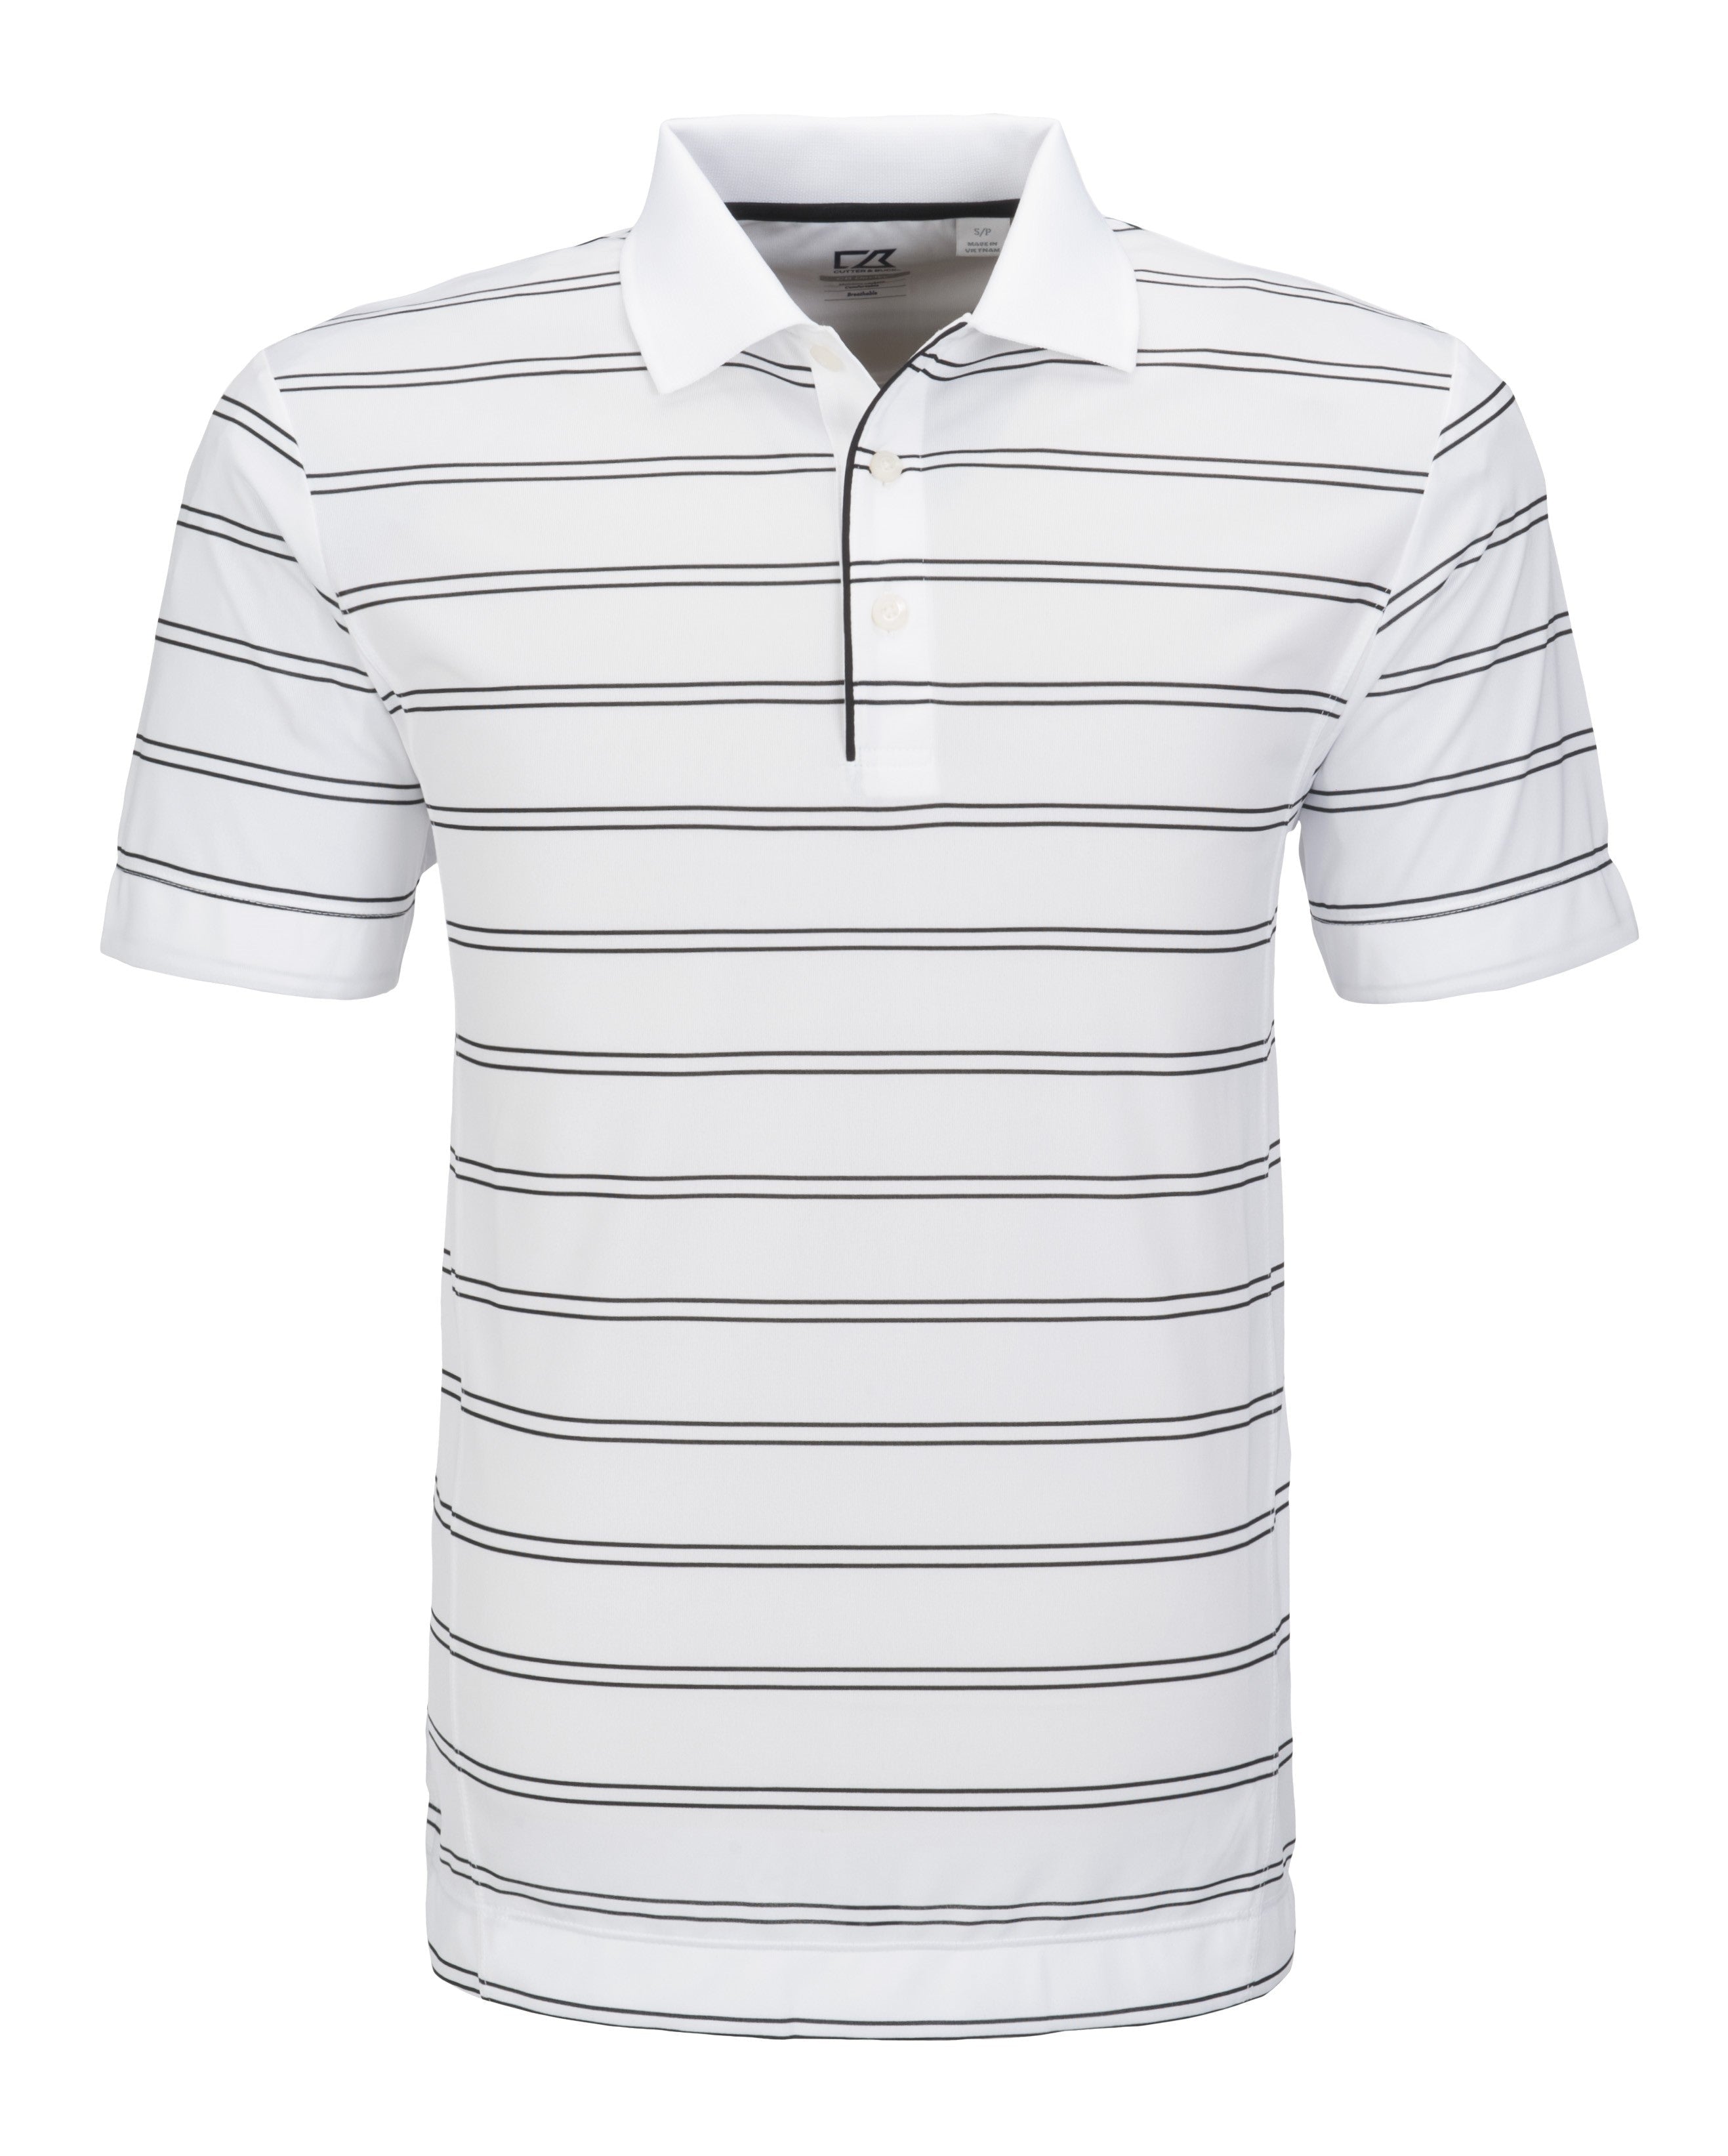 Mens Hawthorne Golf Shirt - Black Only-L-White-W